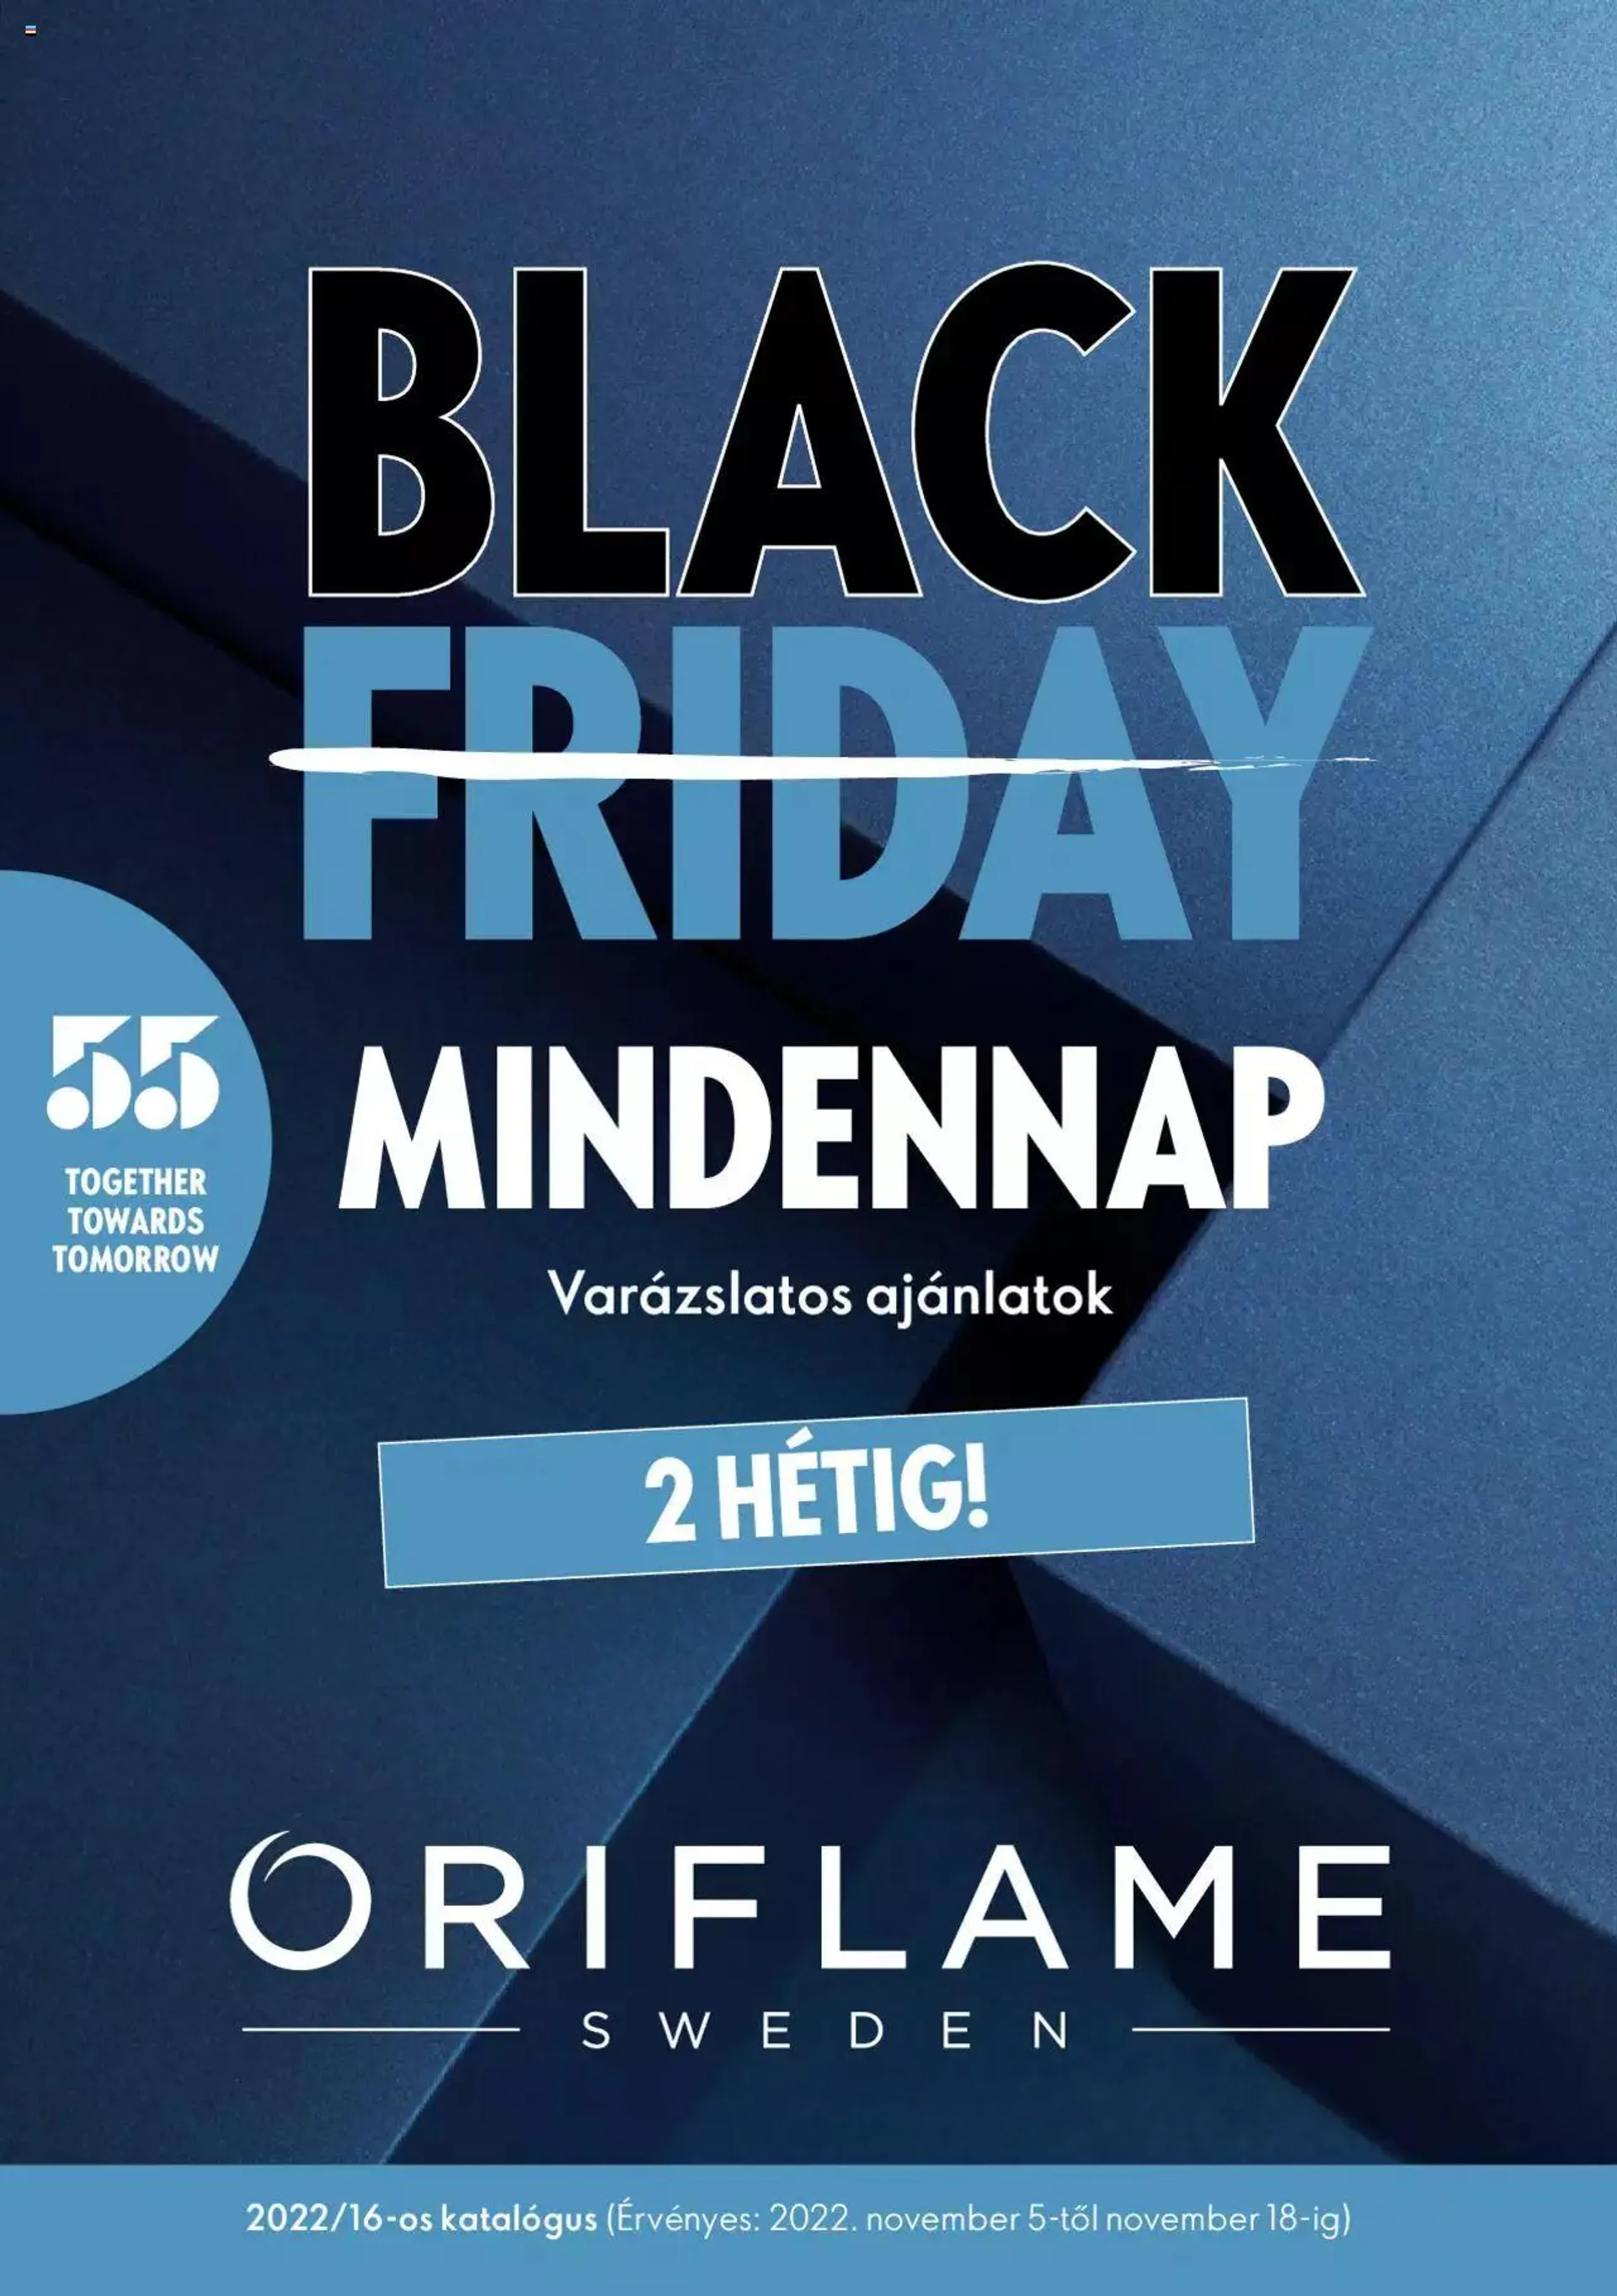 Oriflame - Black Friday mindennap - 0